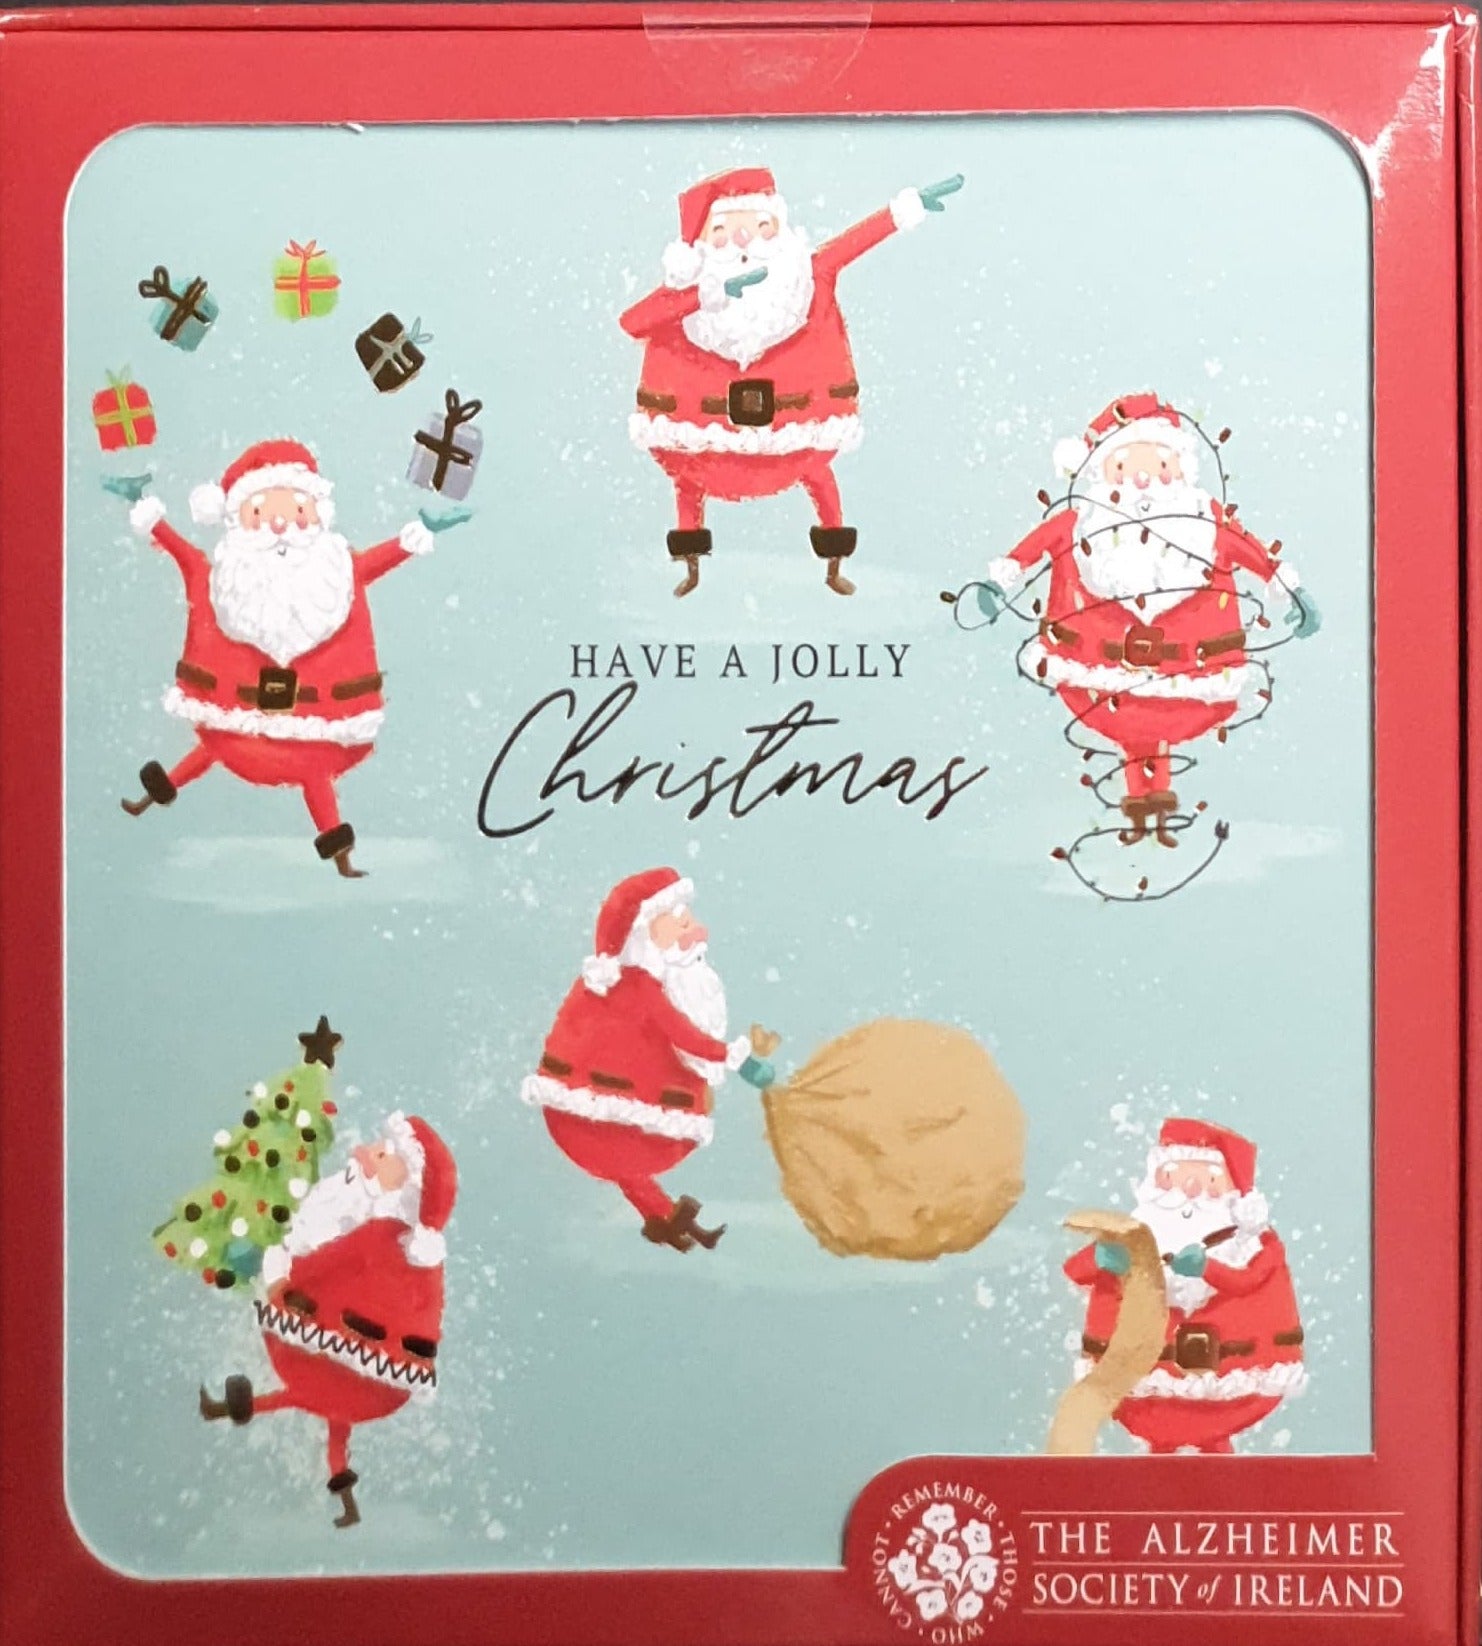 Charity Christmas Card (In Irish & English) - Box of 16 / Alzheimer Society of Ireland - Santas Carrying Gifts, Tree & Lights